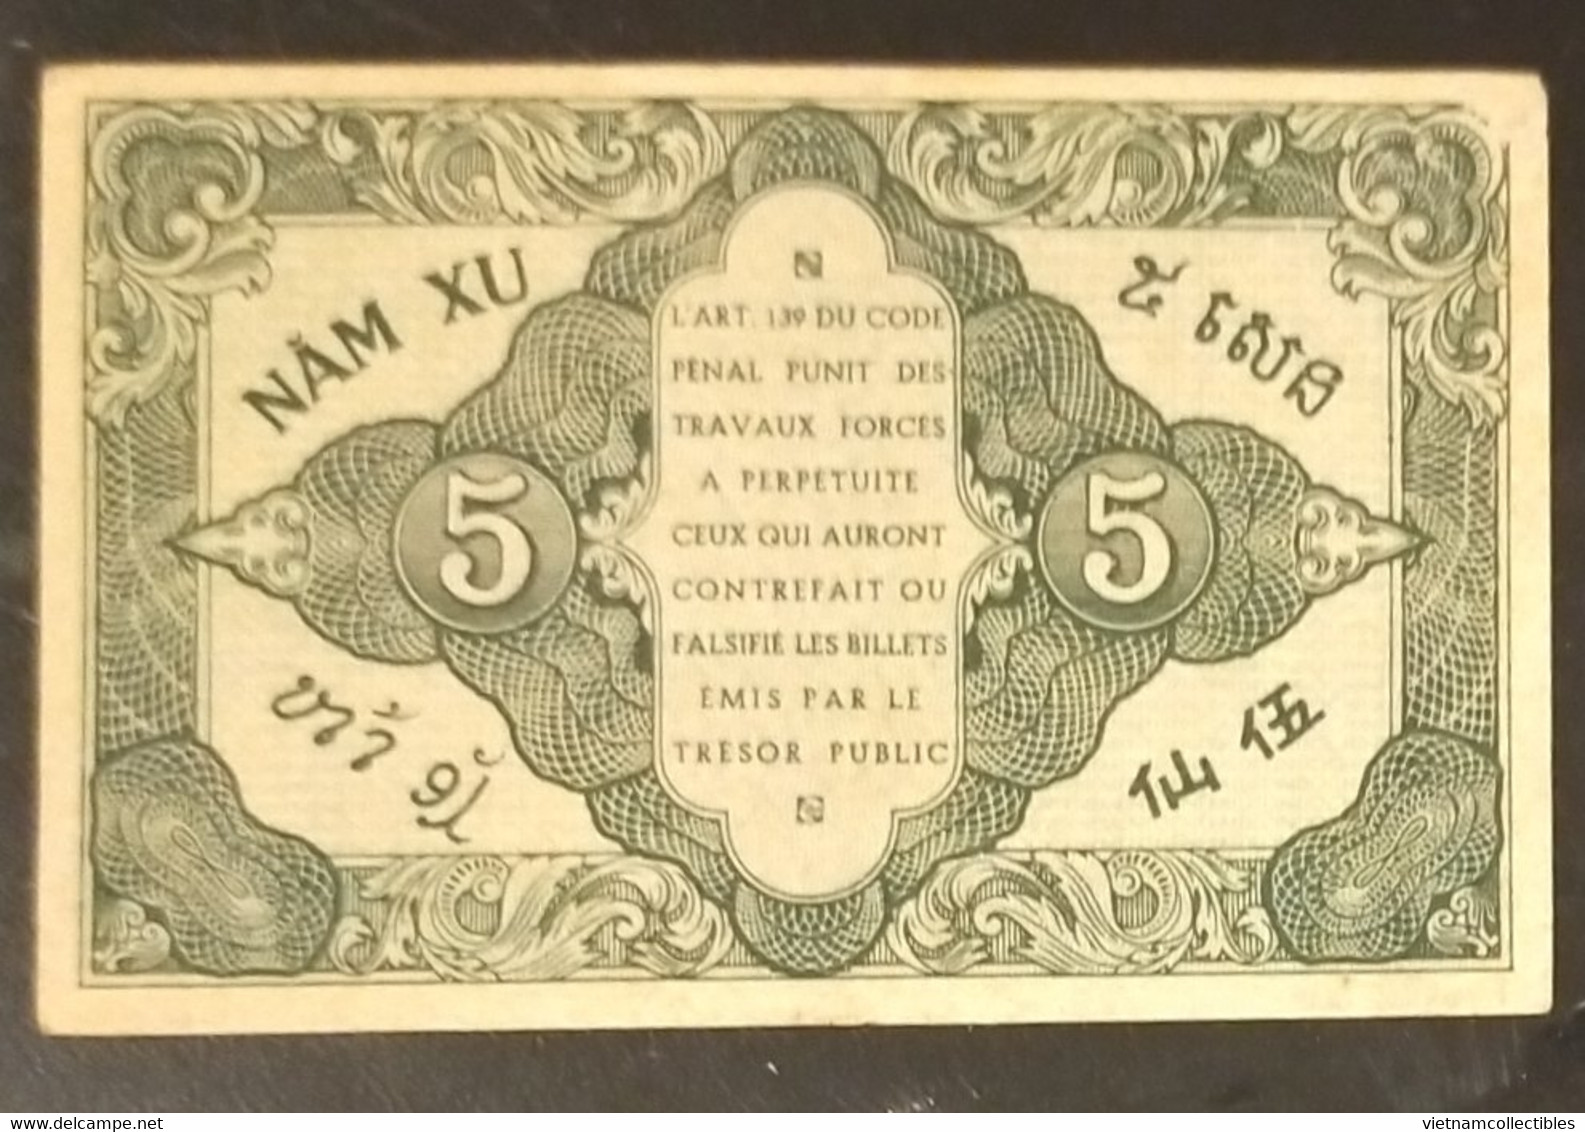 French Indochine Indochina Vietnam Viet Nam Laos Cambodia 5 Cents AU Banknote Note Billet 1942 - Pick # 88b / 2 Photos - Indochina